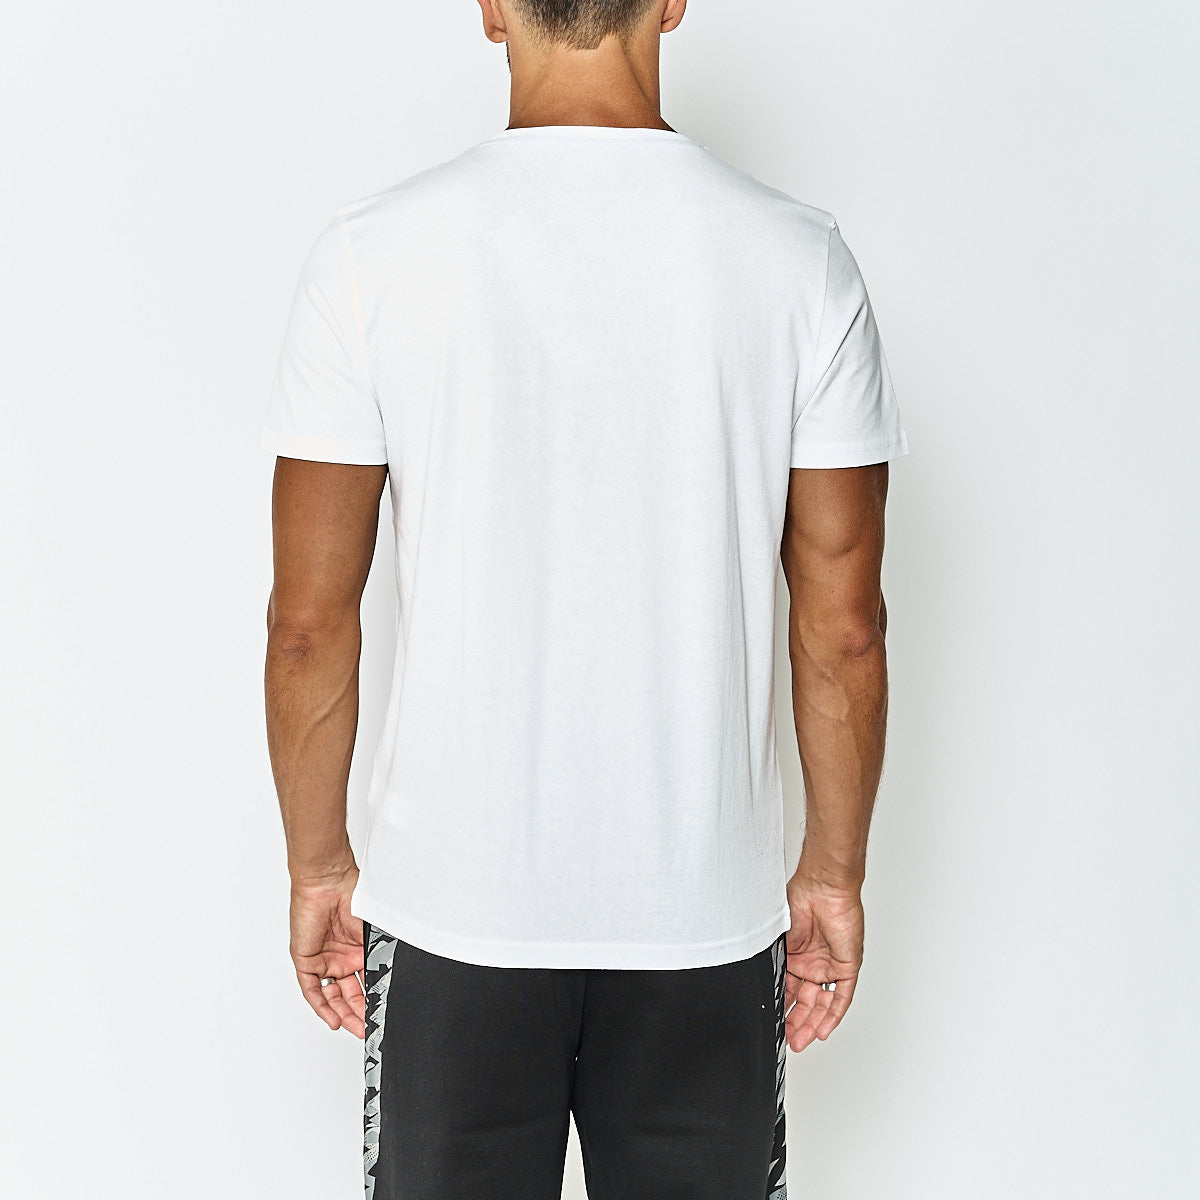 T-shirt homme Cadyx Blanc